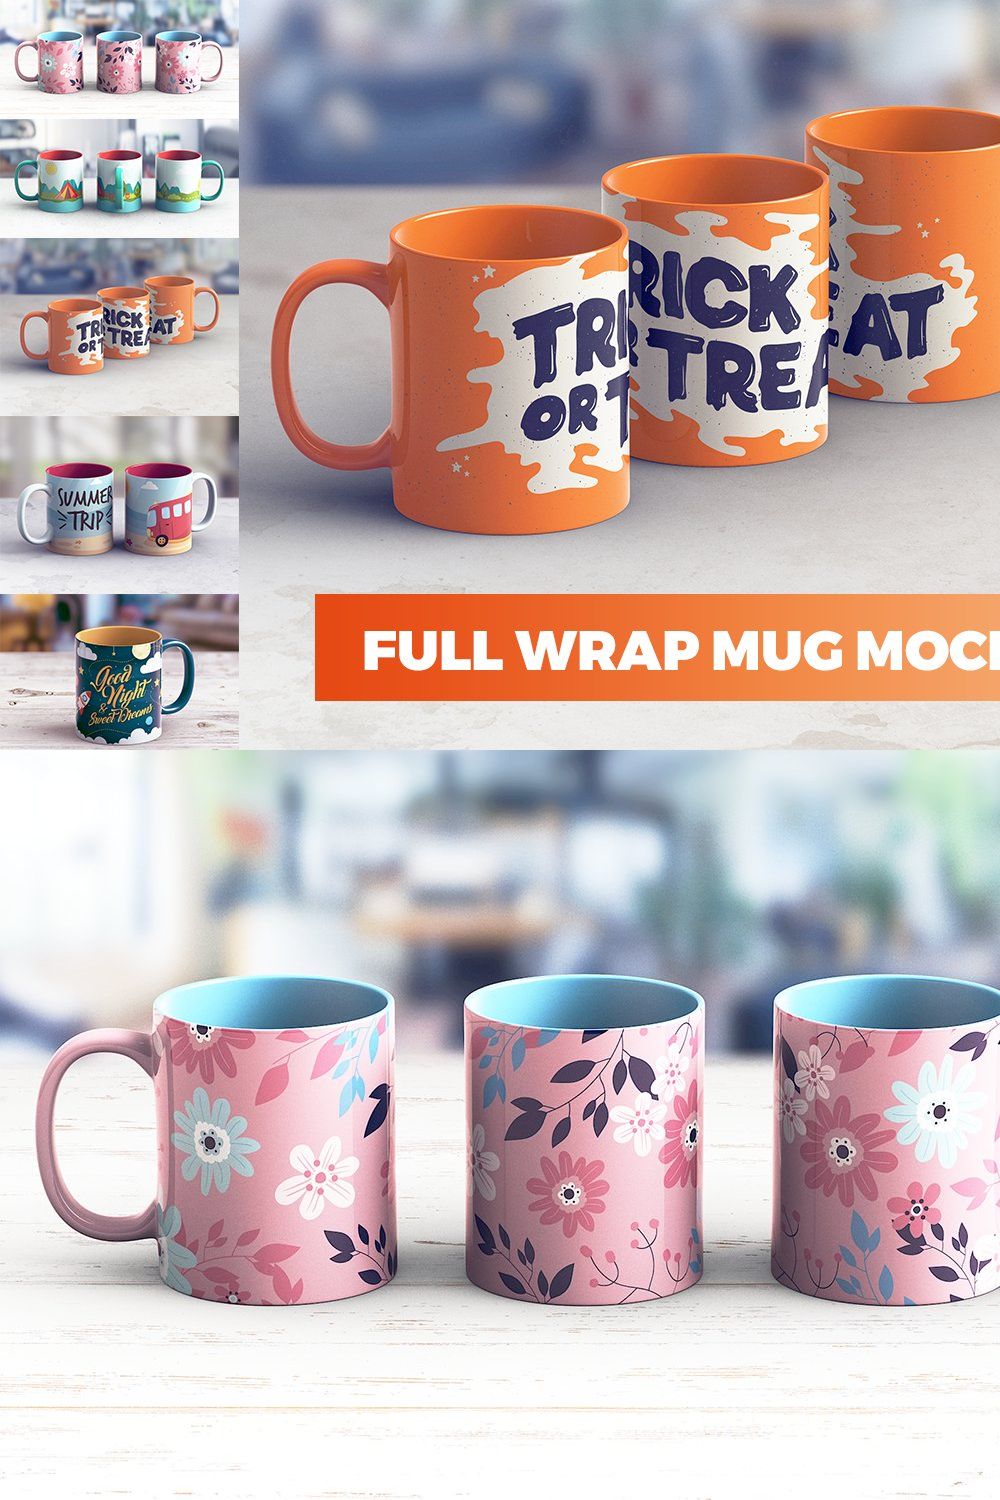 Full Wrap Mug MockUp pinterest preview image.